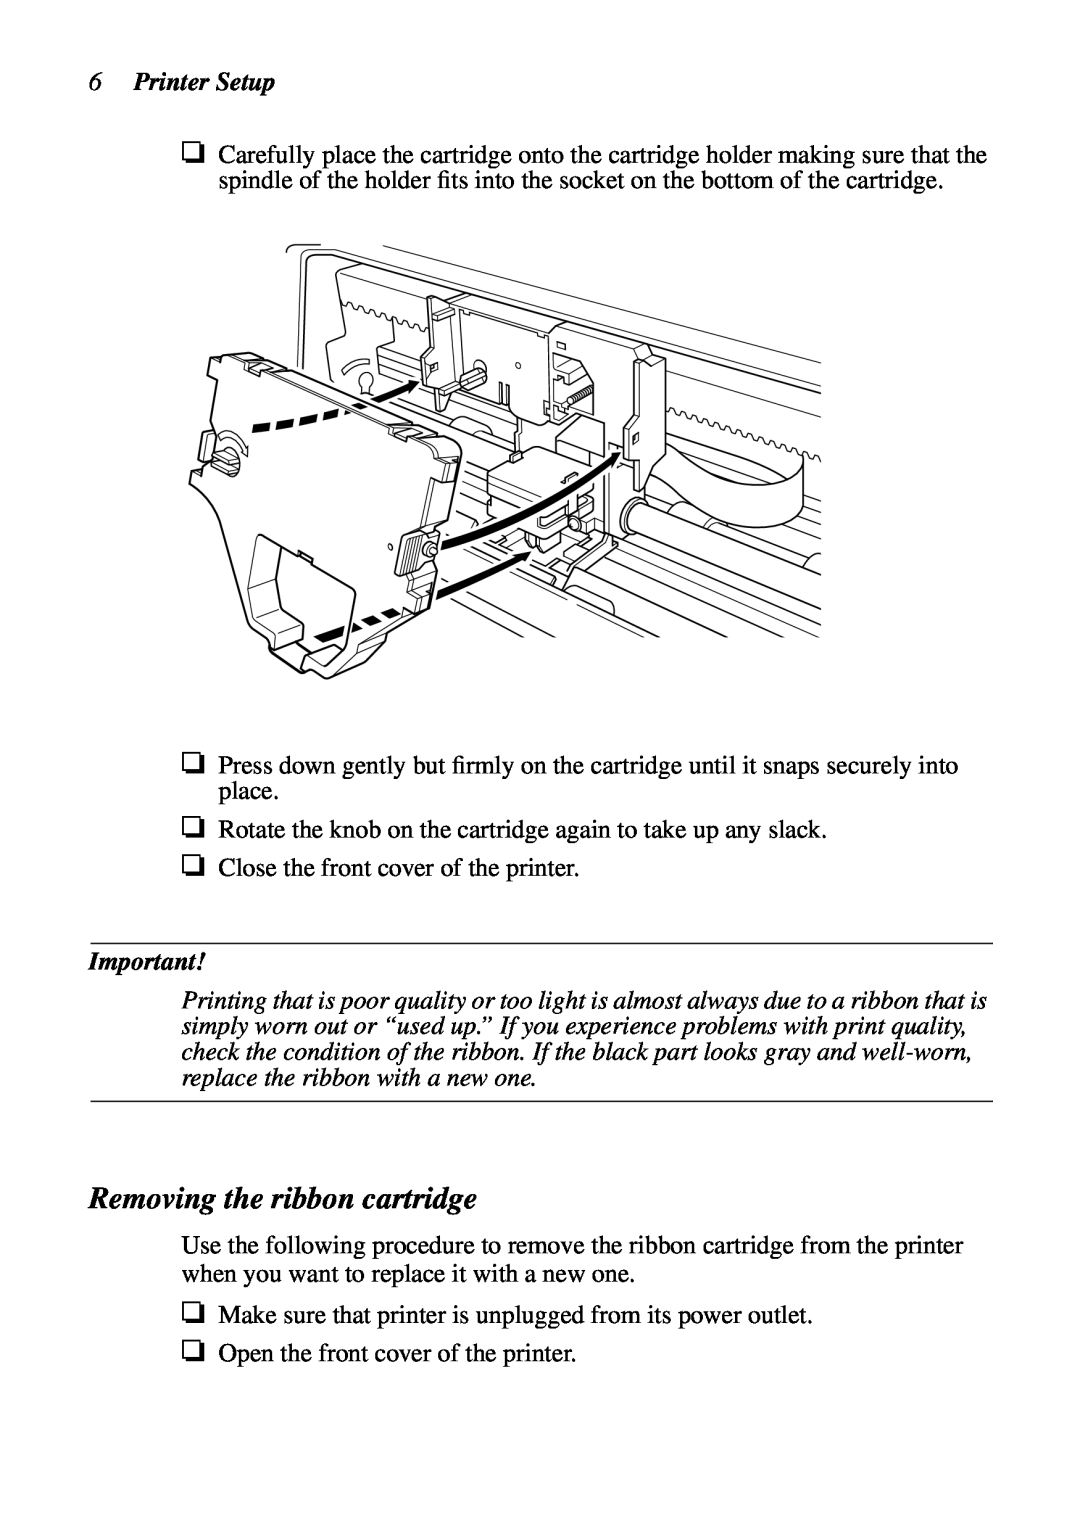 Star Micronics LC-6211 user manual Removing the ribbon cartridge, Printer Setup 